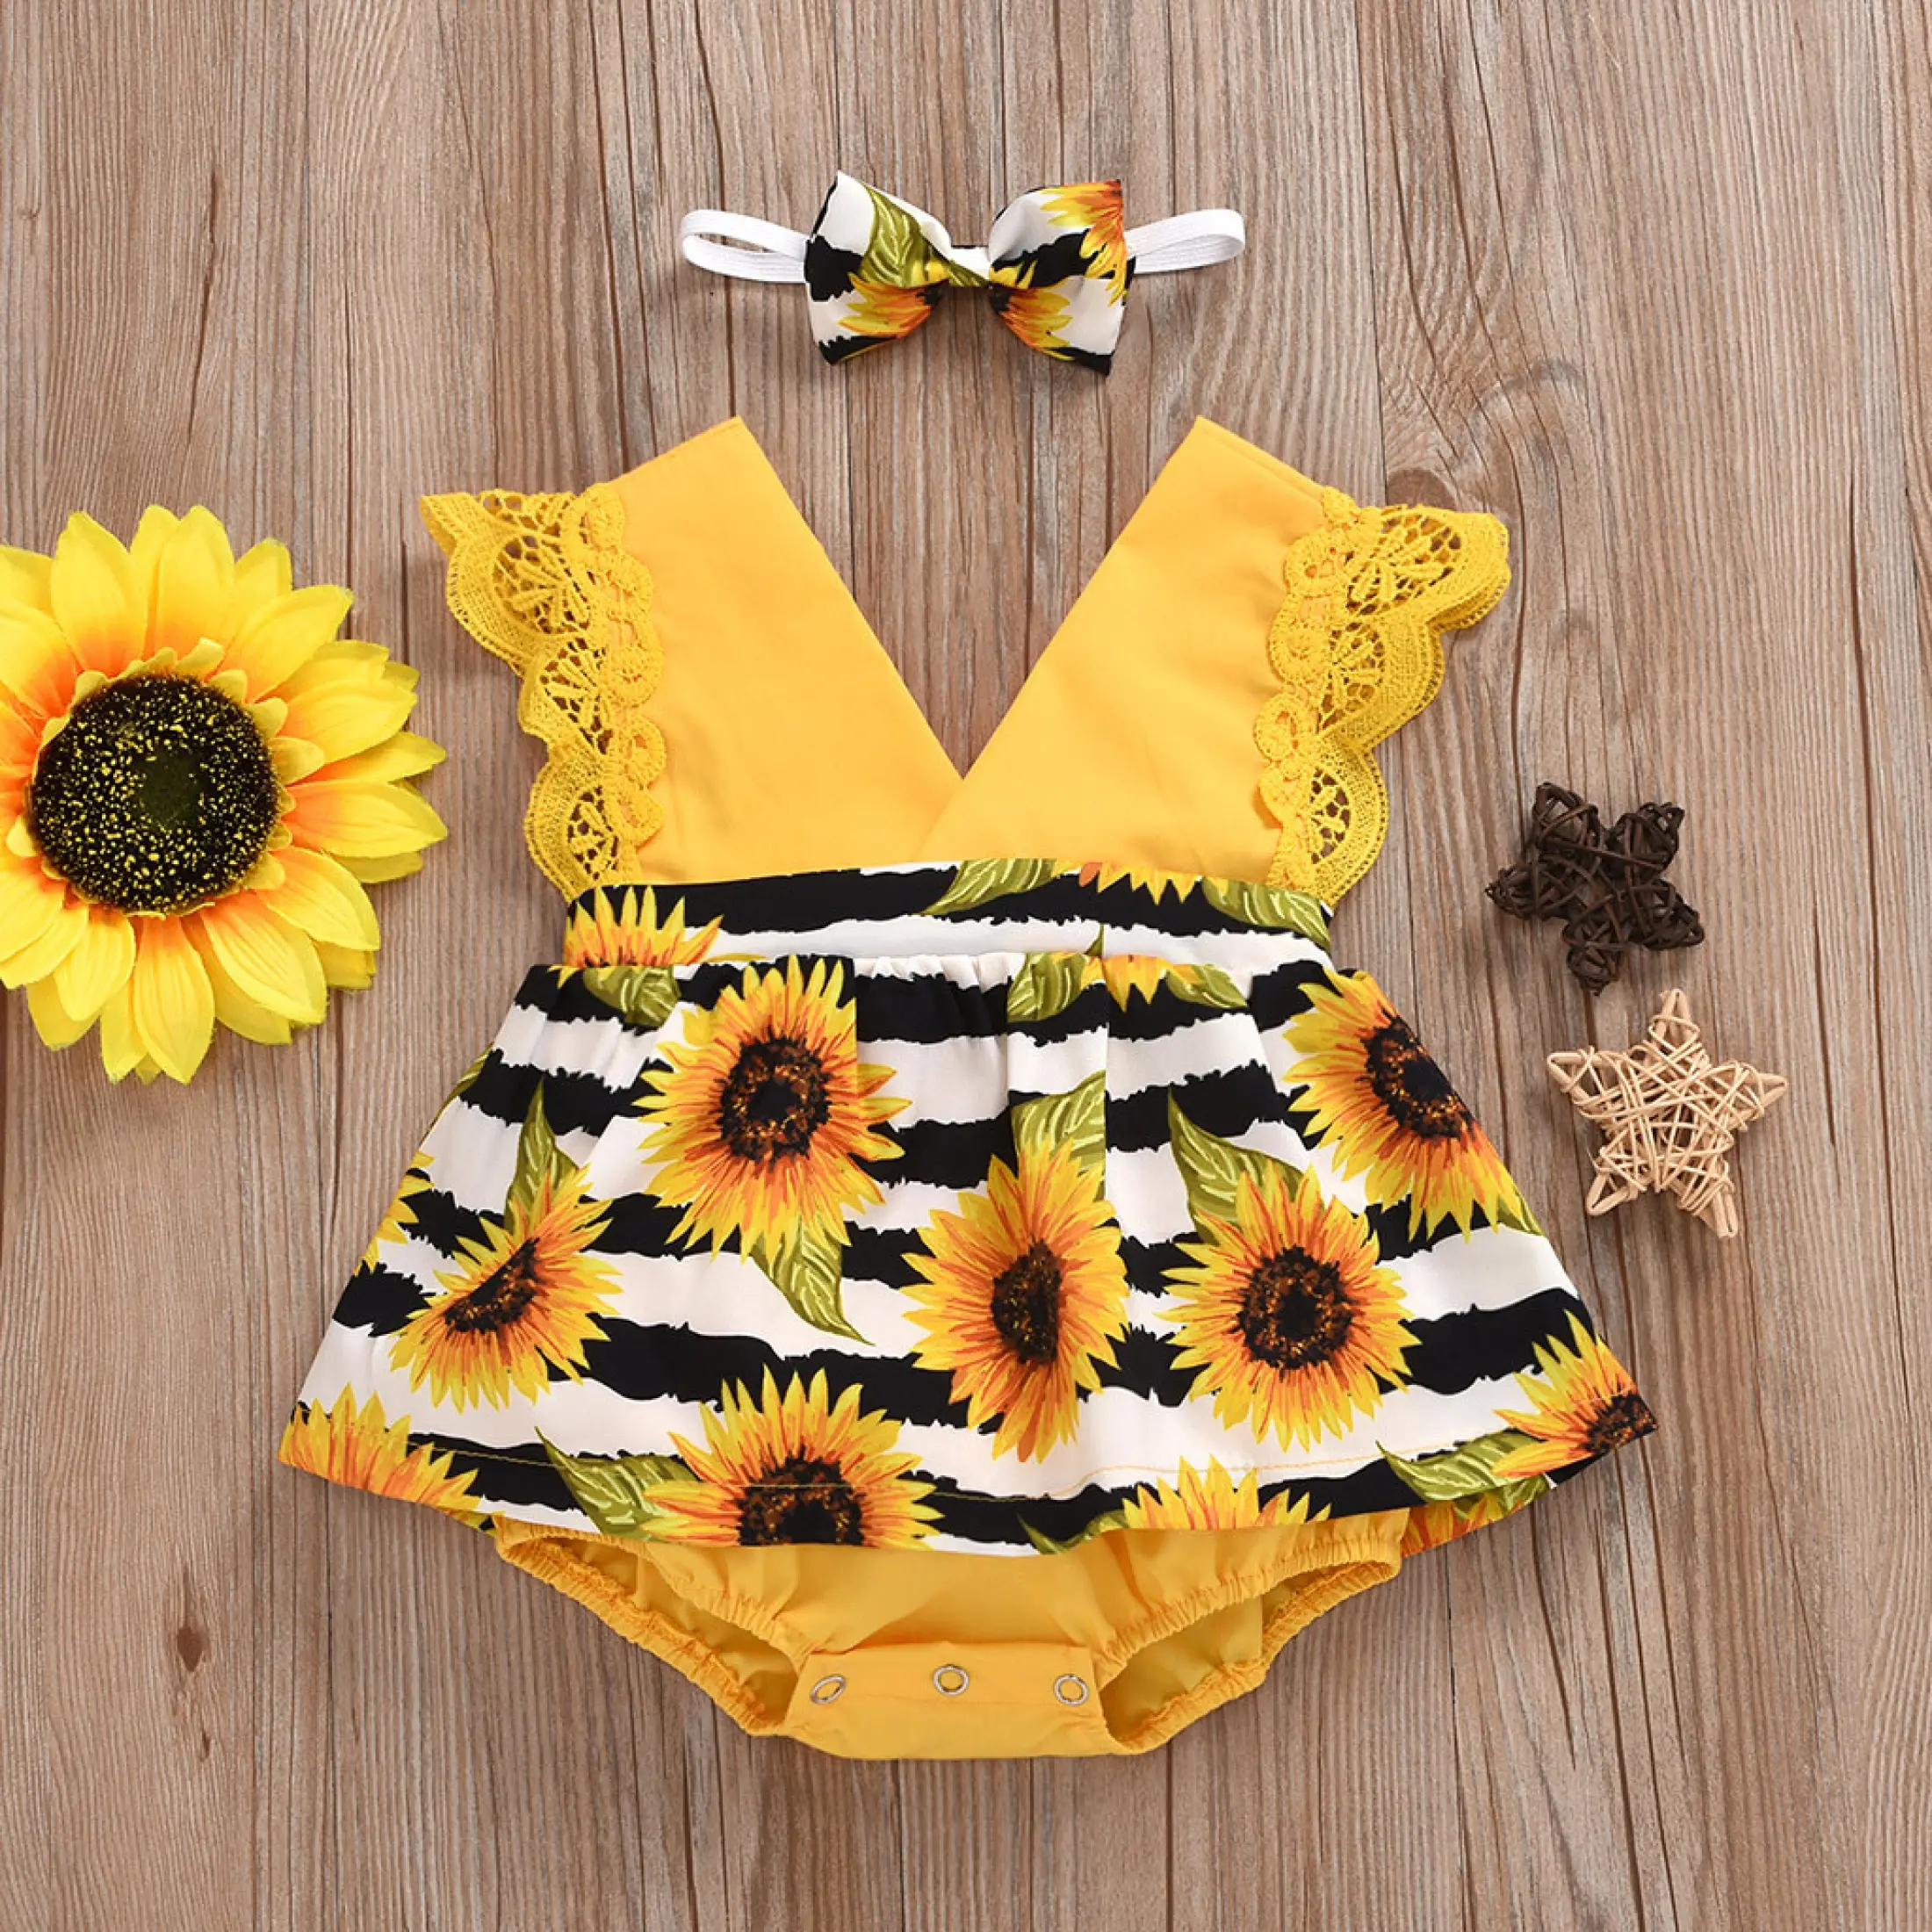 Infant Baby Girls Sleeveless Sunflower Print Lace Romper Dress+Headband Outfits